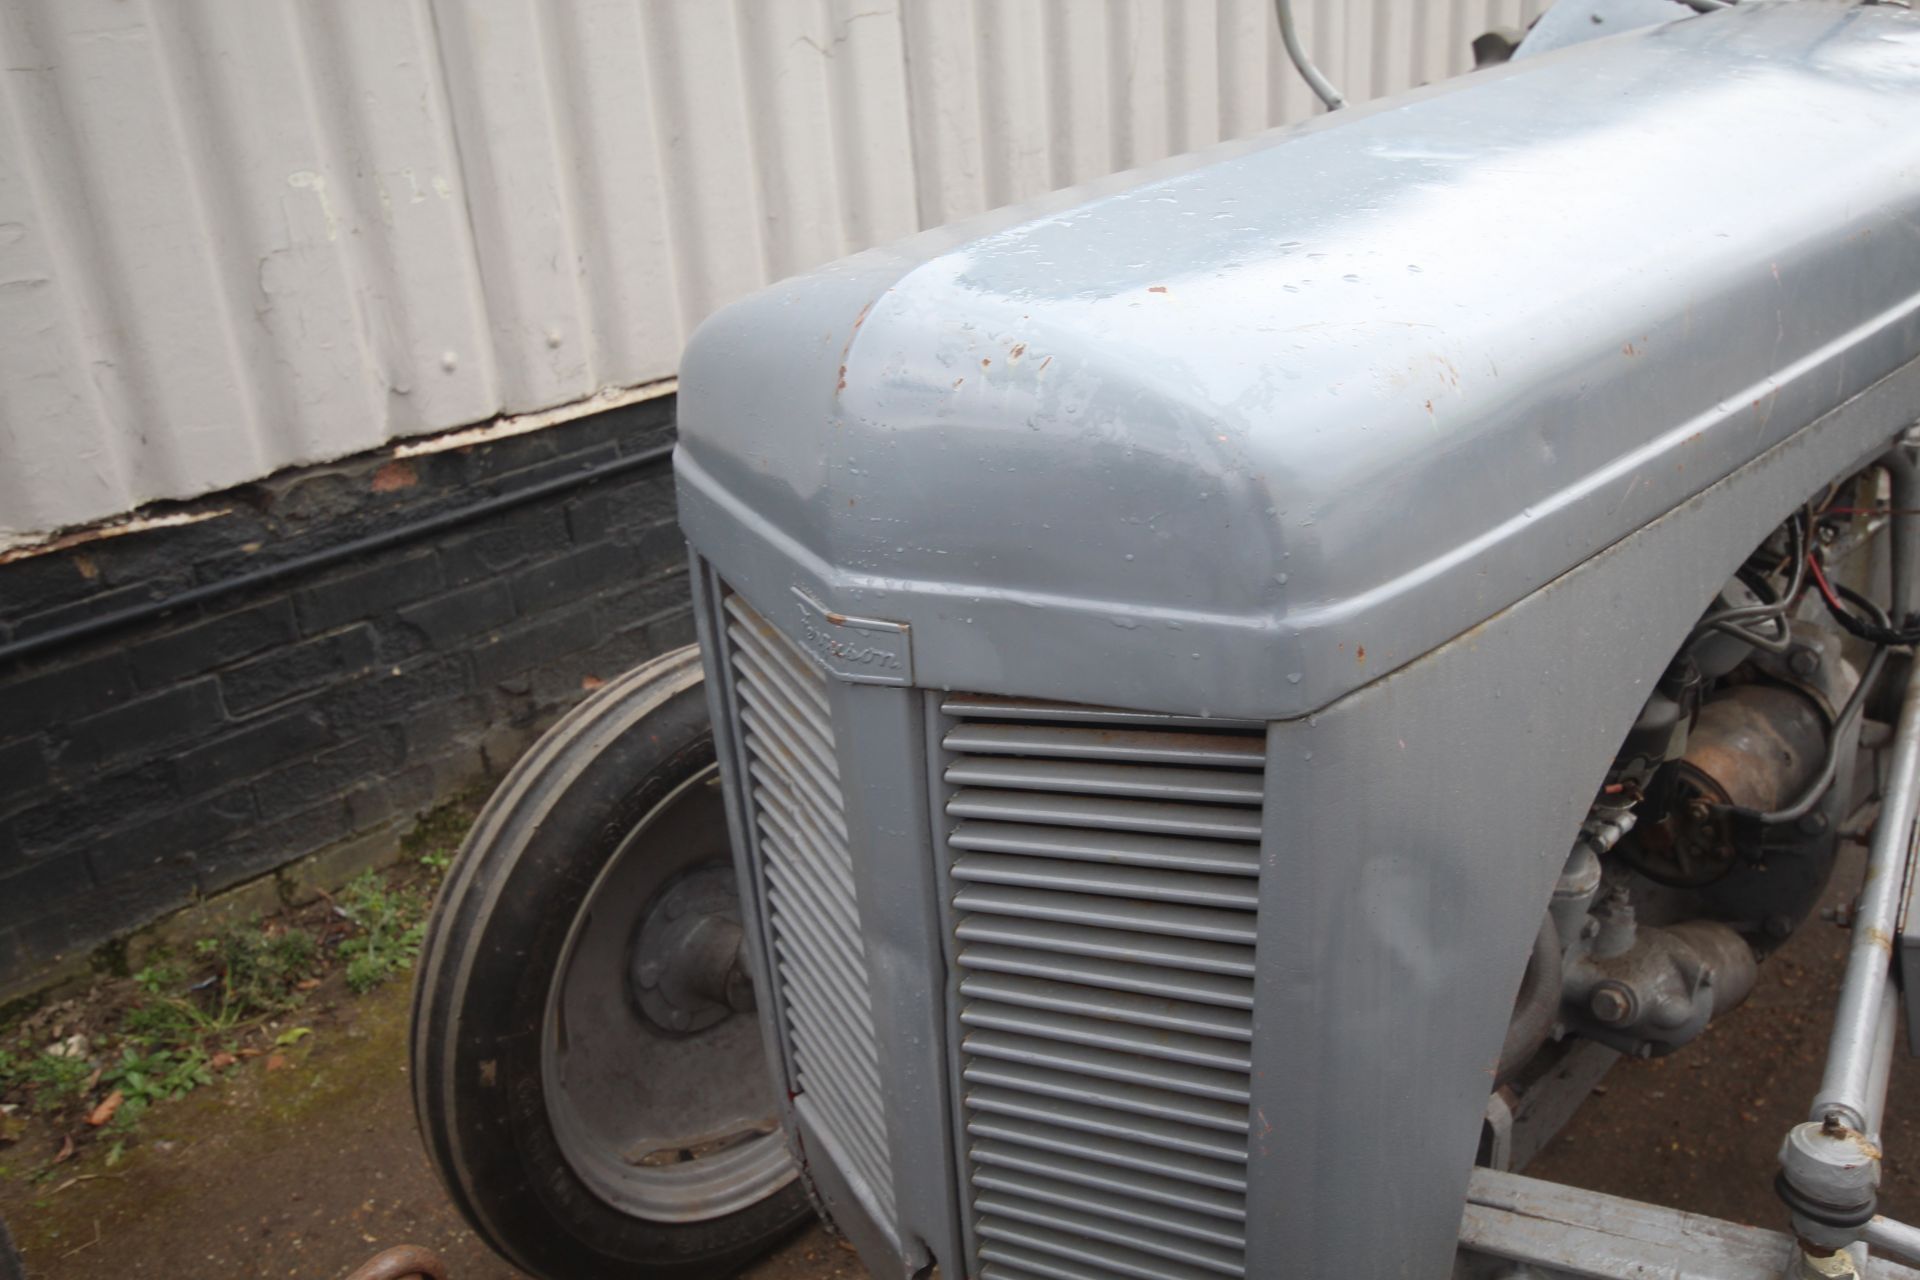 Ferguson TEA 20 Petrol 2WD tractor. Registration 771 XUN. 1948. Serial number 57289. 11.2-28 rear - Image 5 of 44